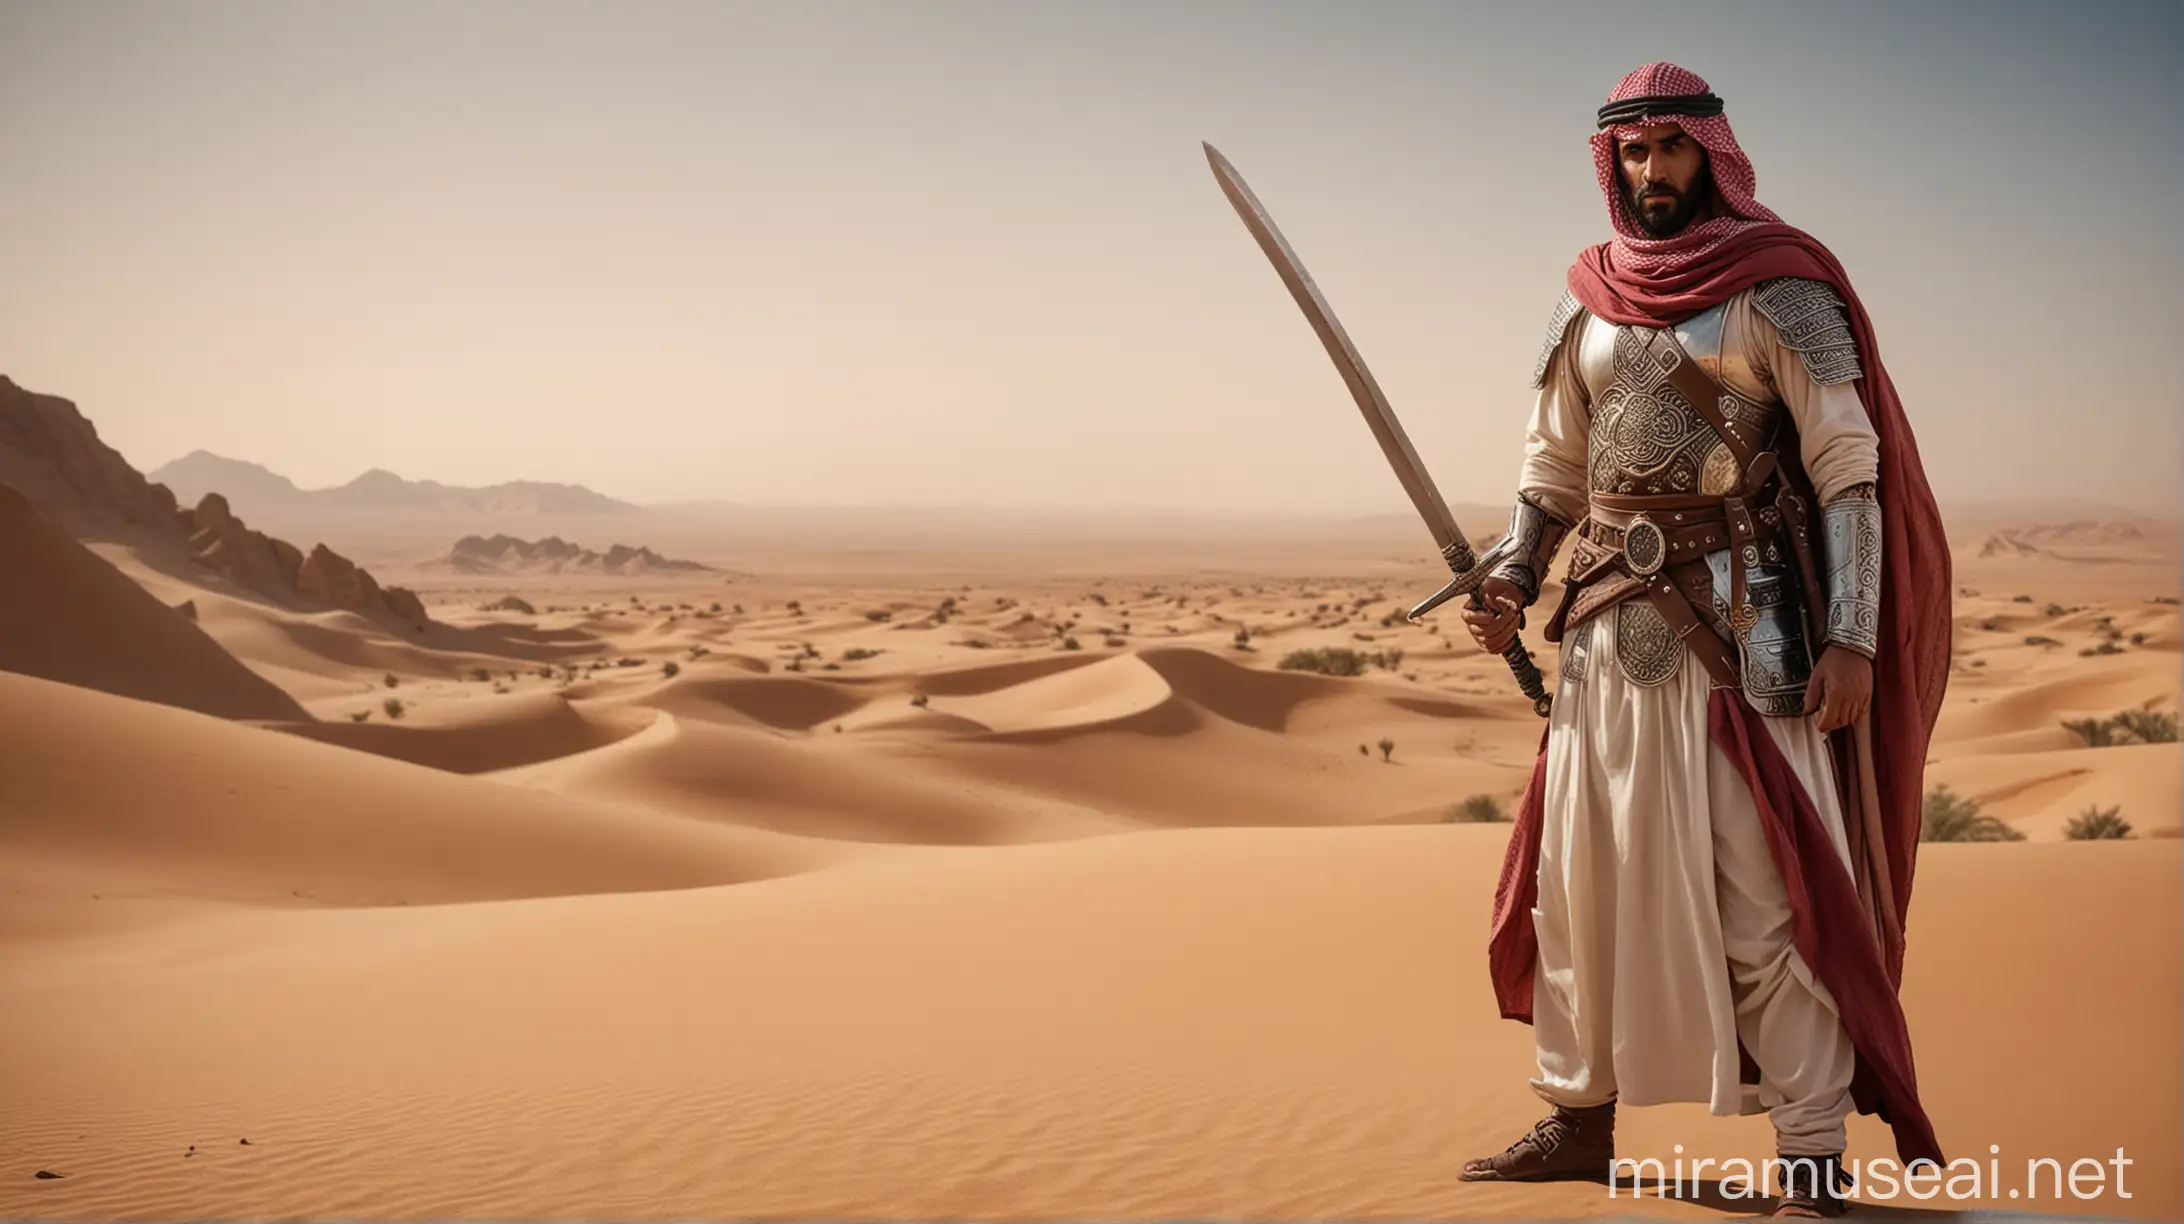 600ad arabian knight holding arabian sword in the desert 